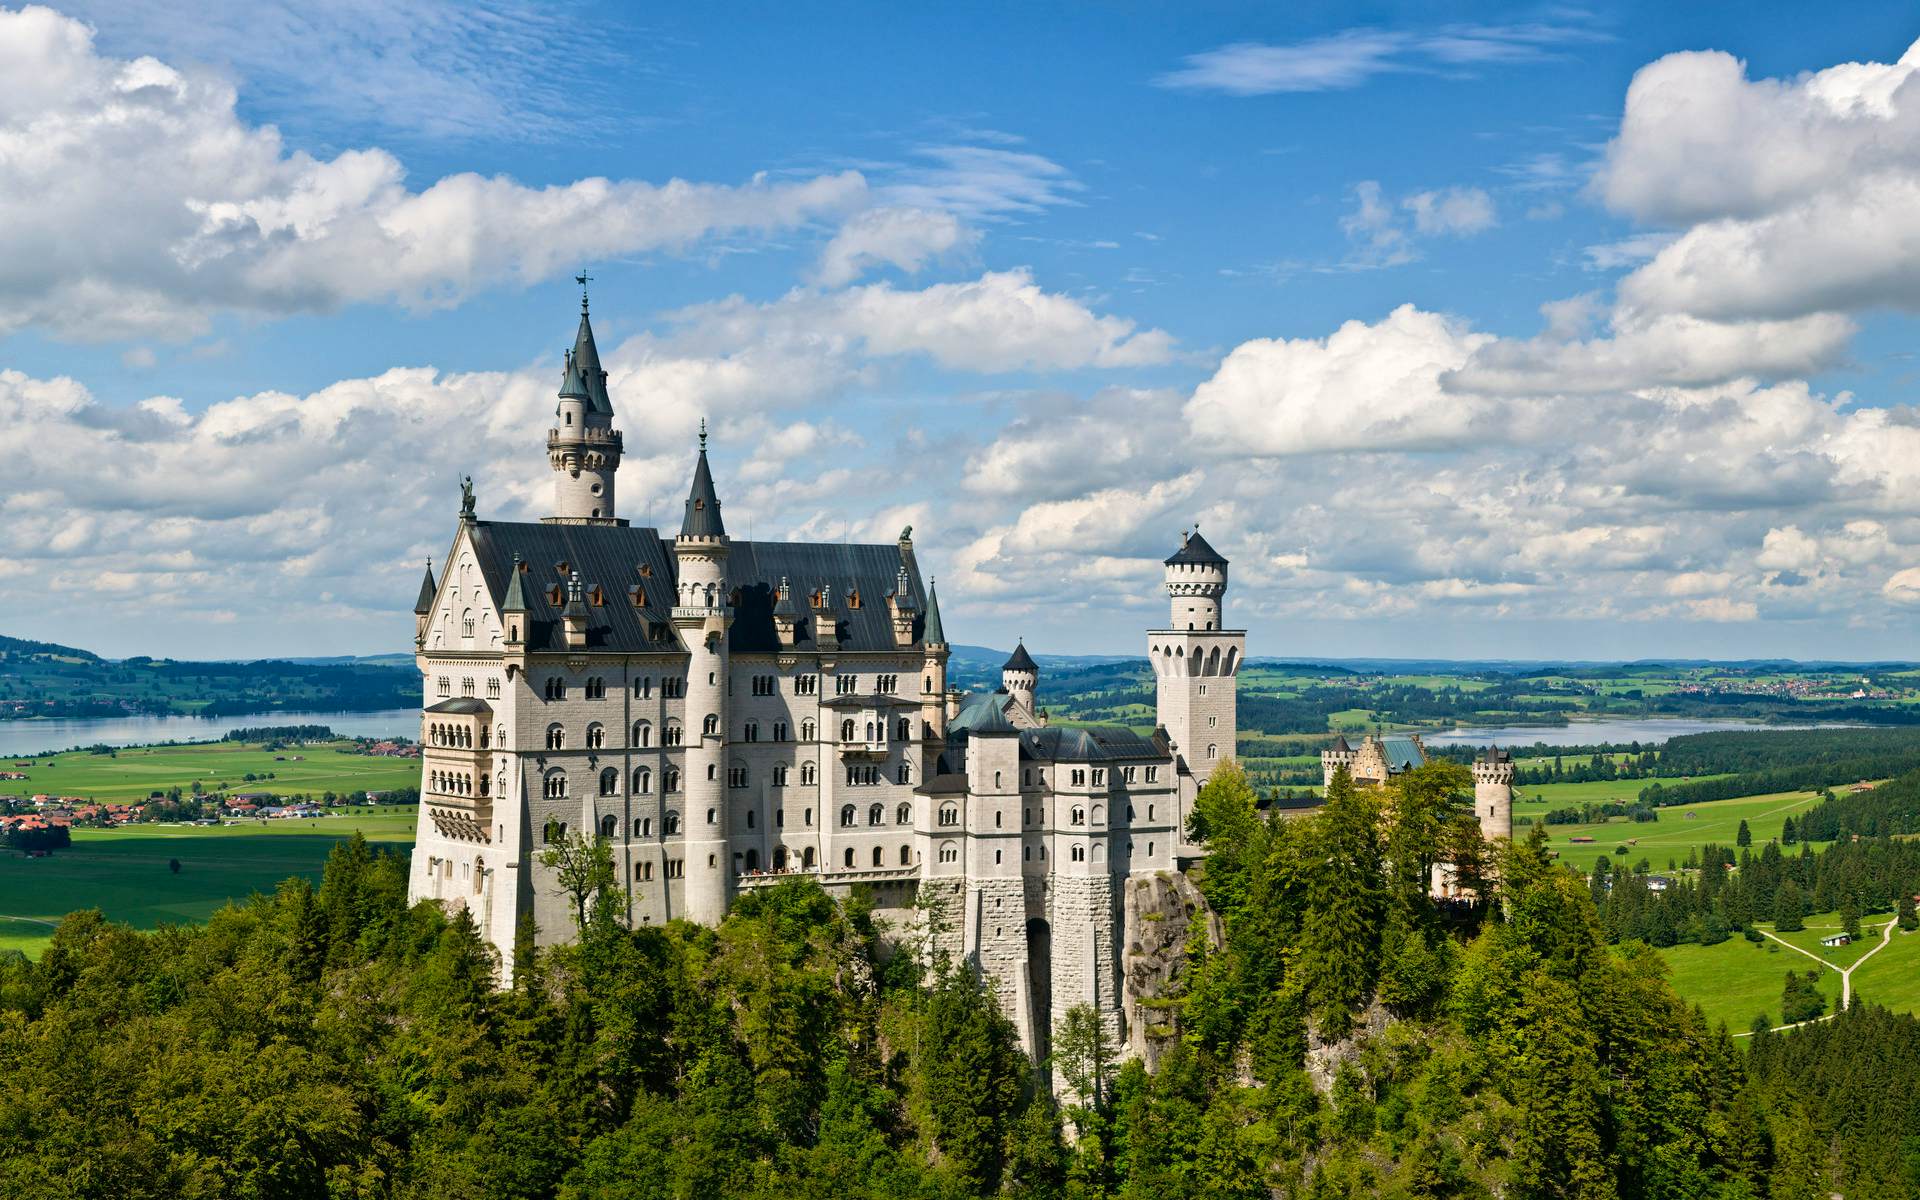 Royal Castles of Neuschwanstein and Linderhof Day Tour from Munich